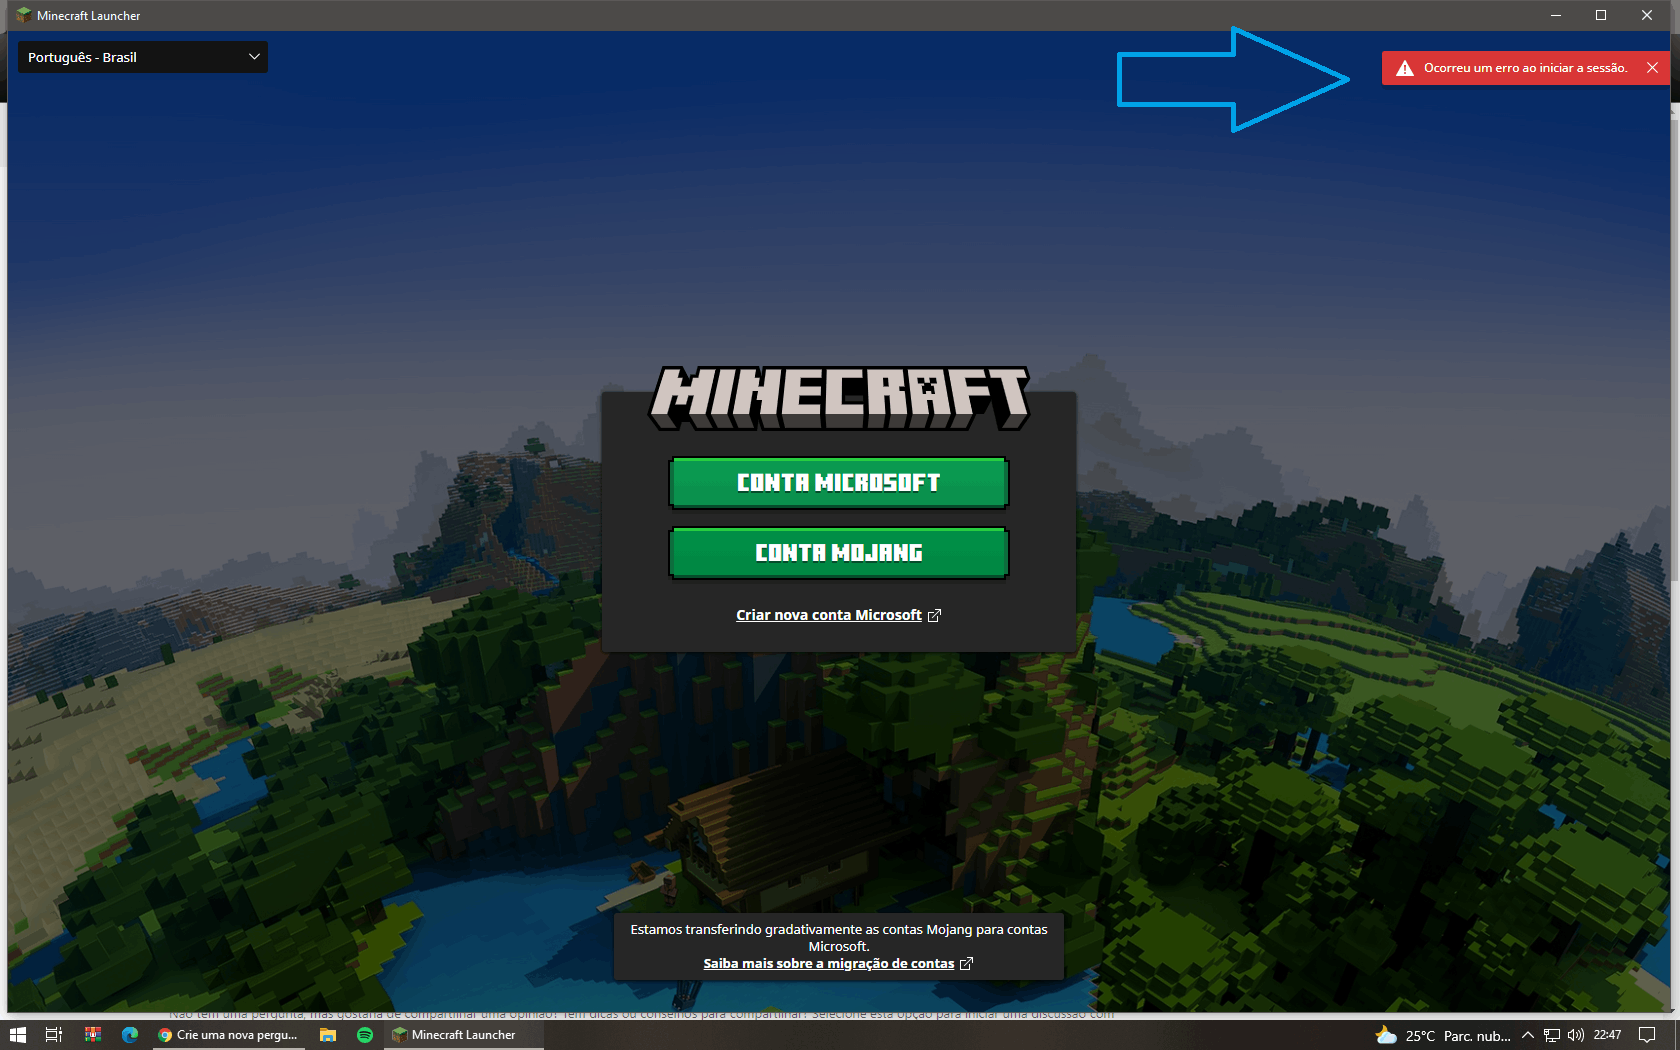 Desbloquear Minecraft. - Microsoft Community